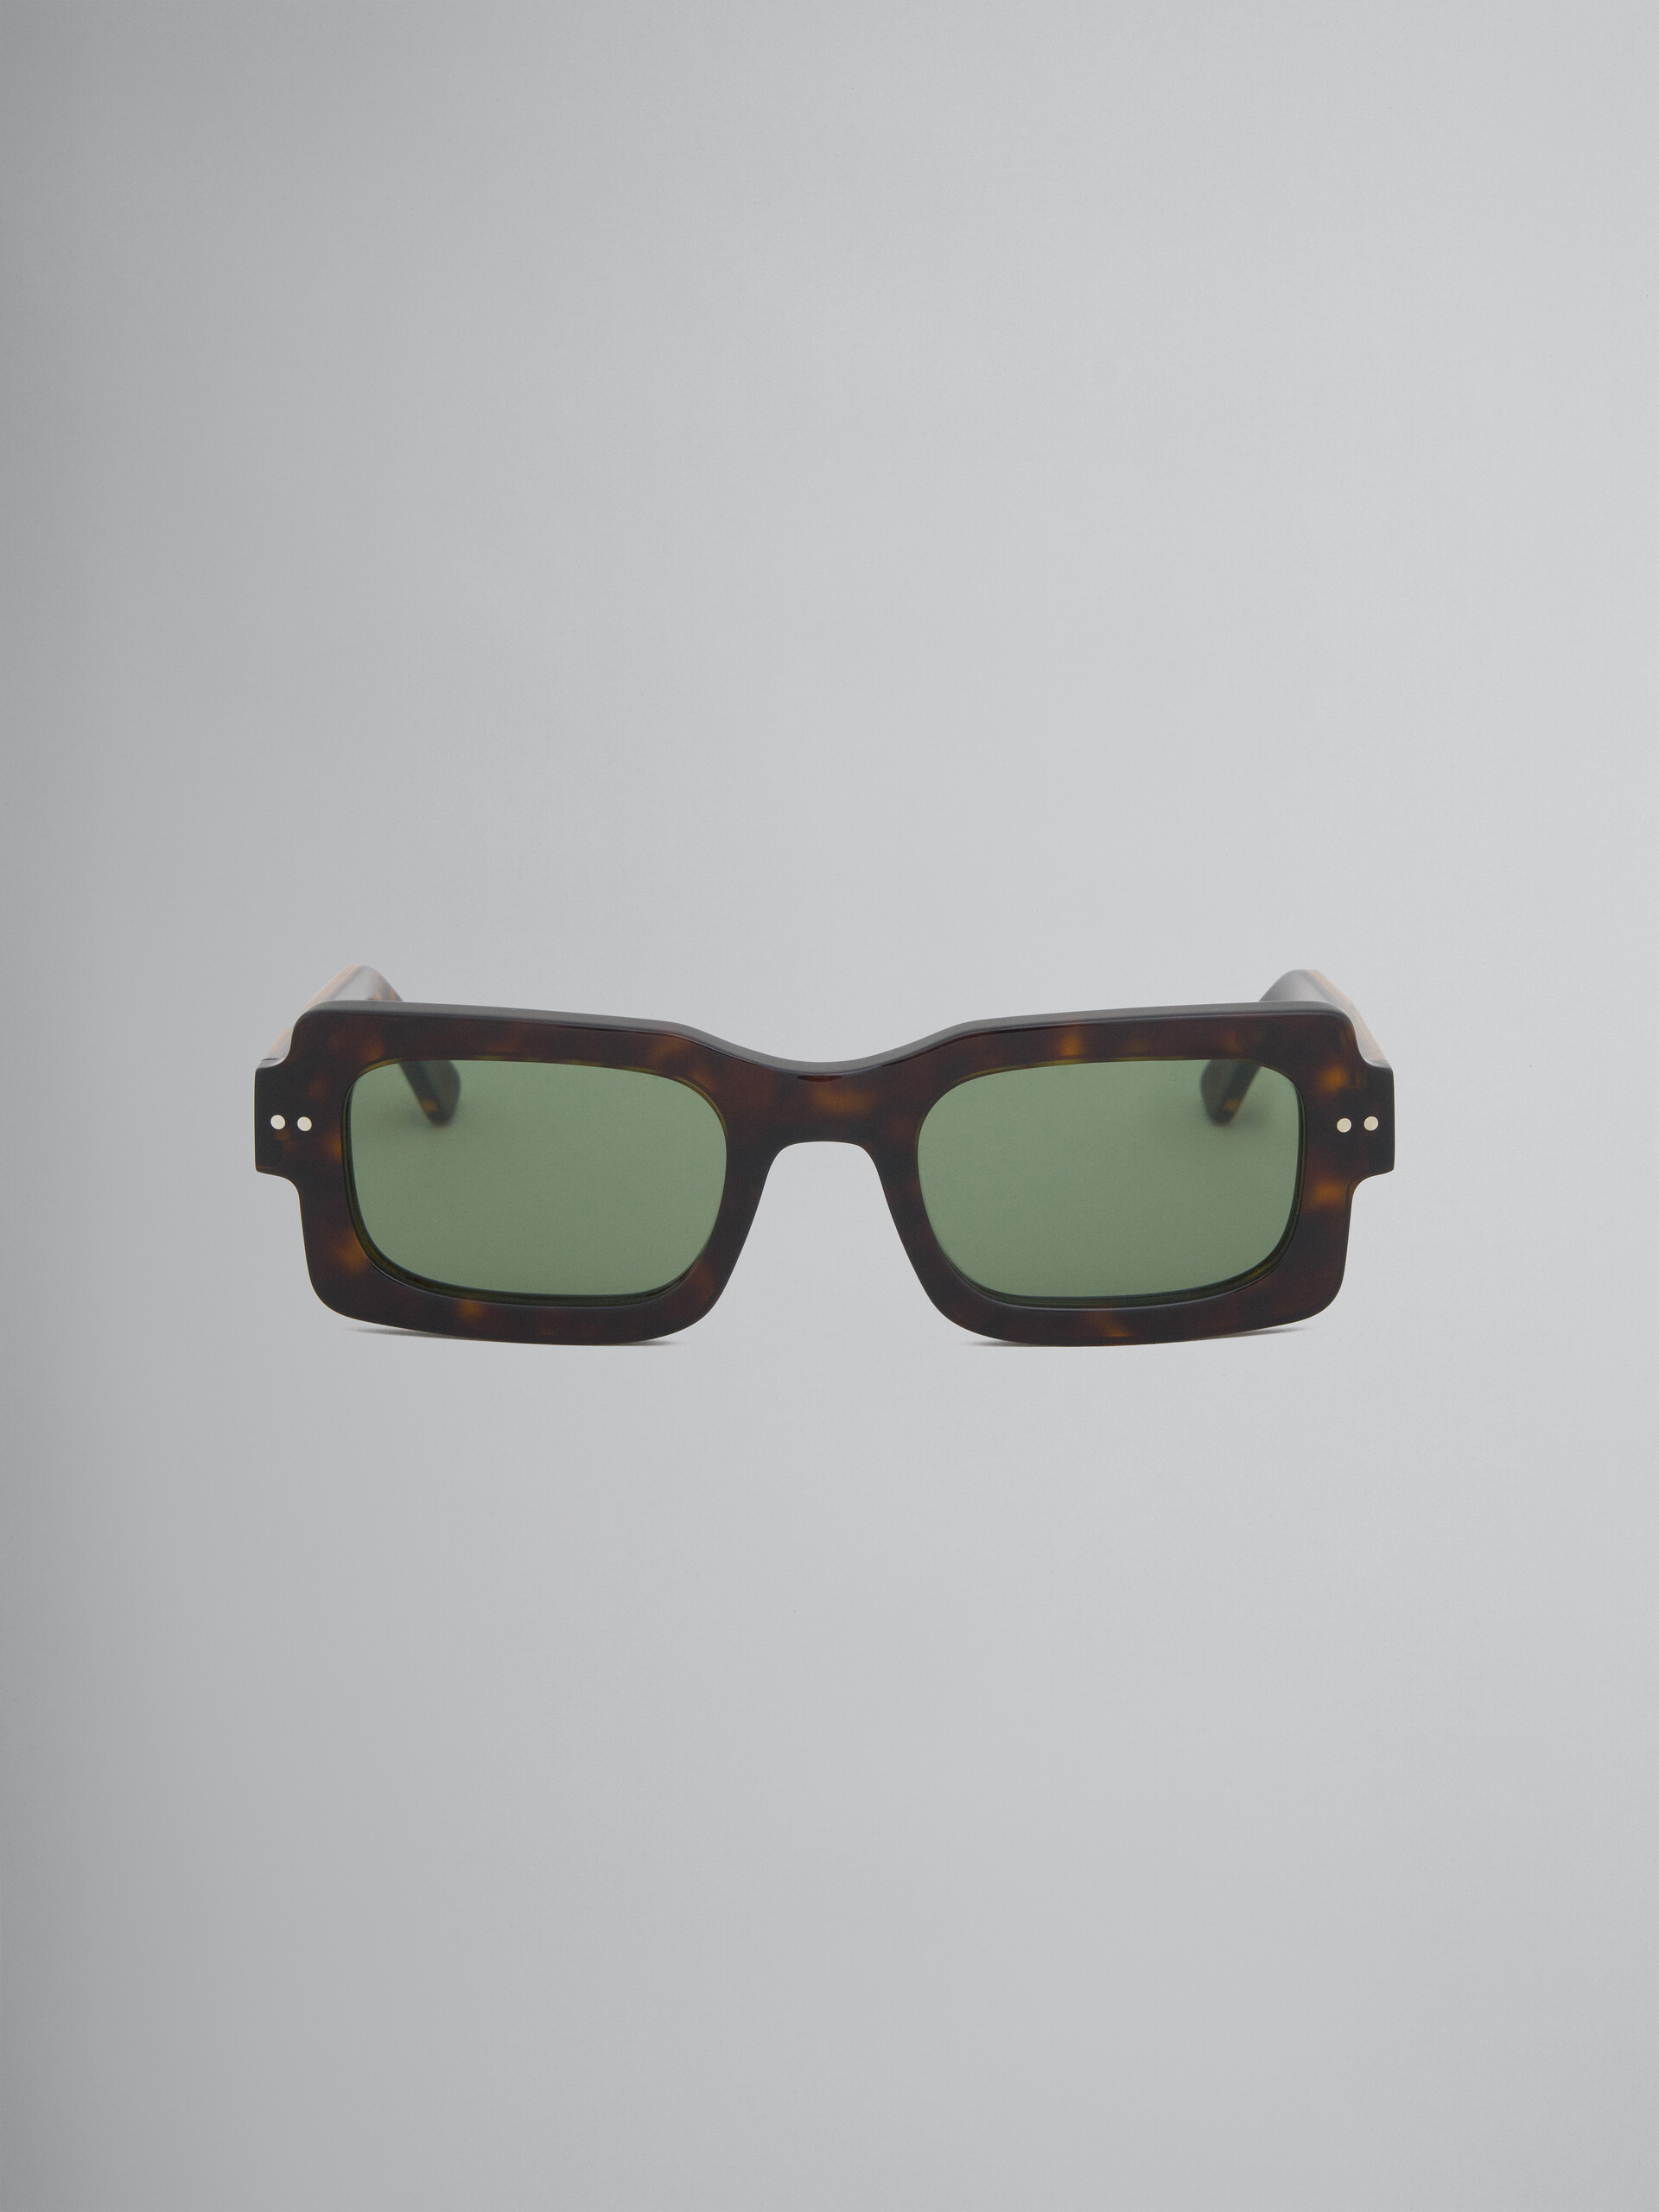 Tortoiseshell acetate LAKE VOSTOK sunglasses - Optical - Image 1